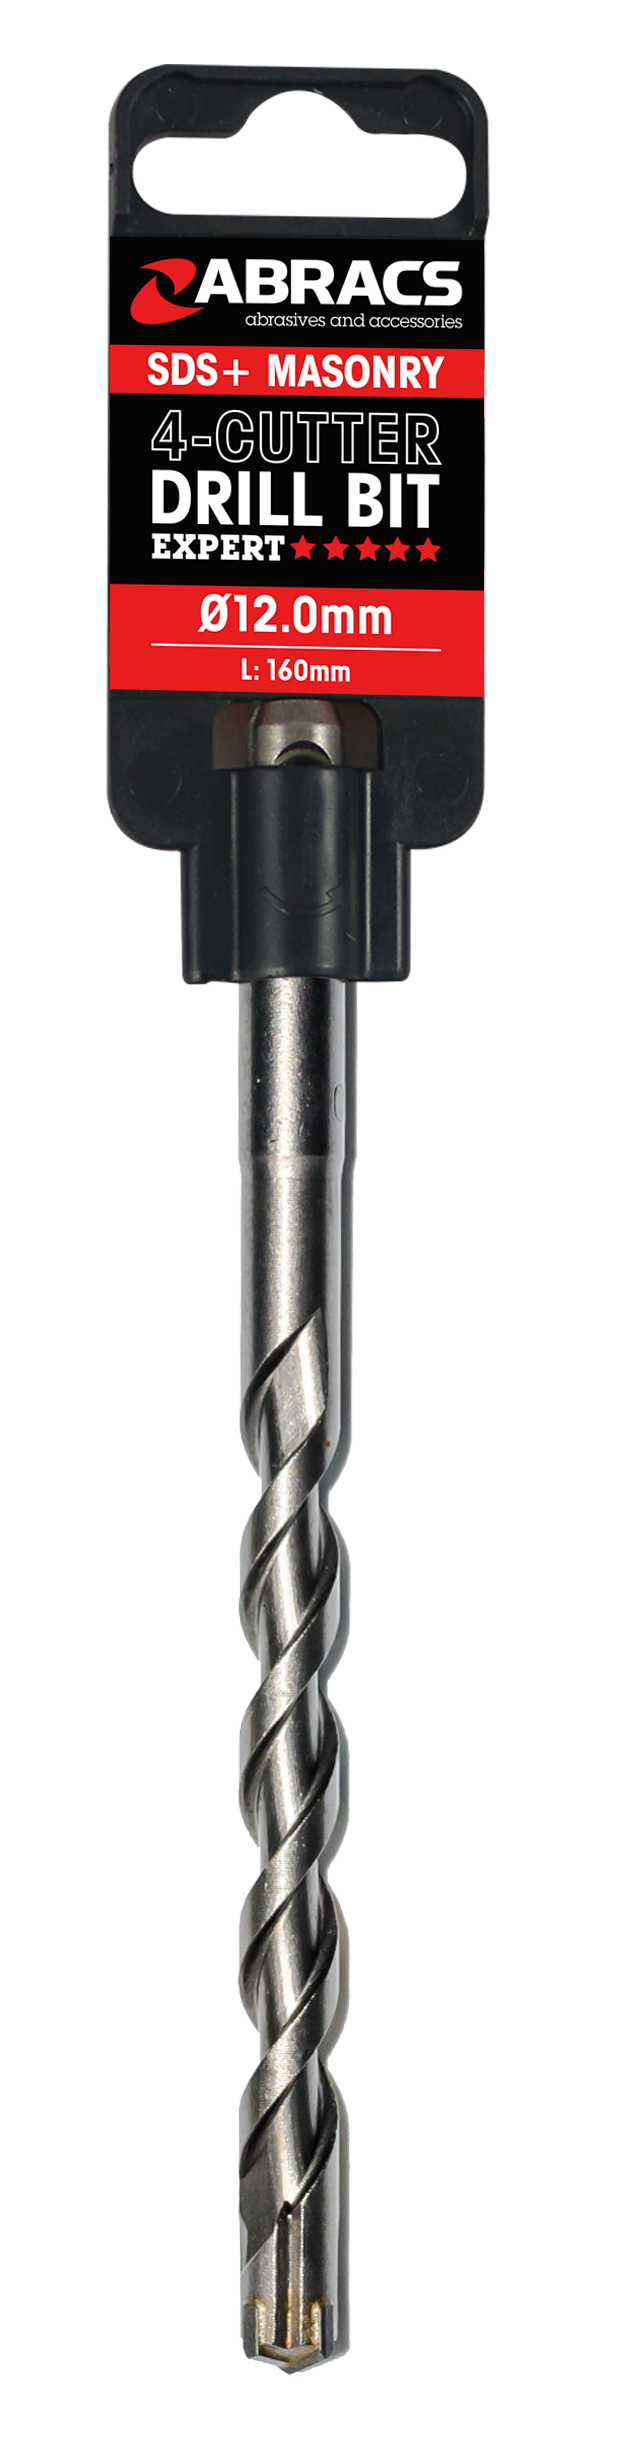 DBCX120210 12.0mm x 210mm SDS+ Masonry Drill Bit - 4 Cutter